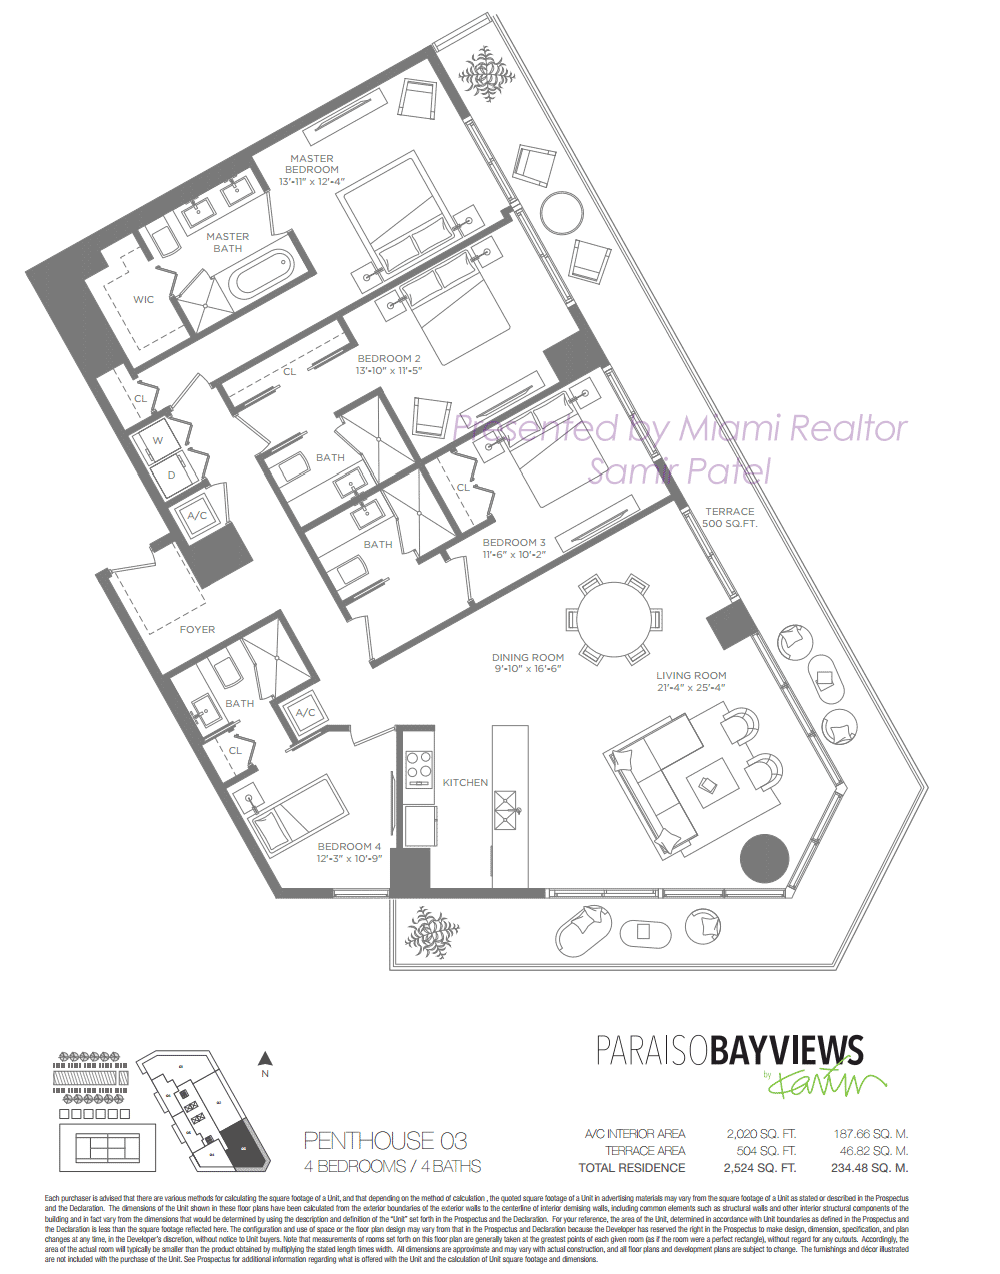 Floorplan of Paraiso Bayviews Condominium of Penthouse 03 Line in Building